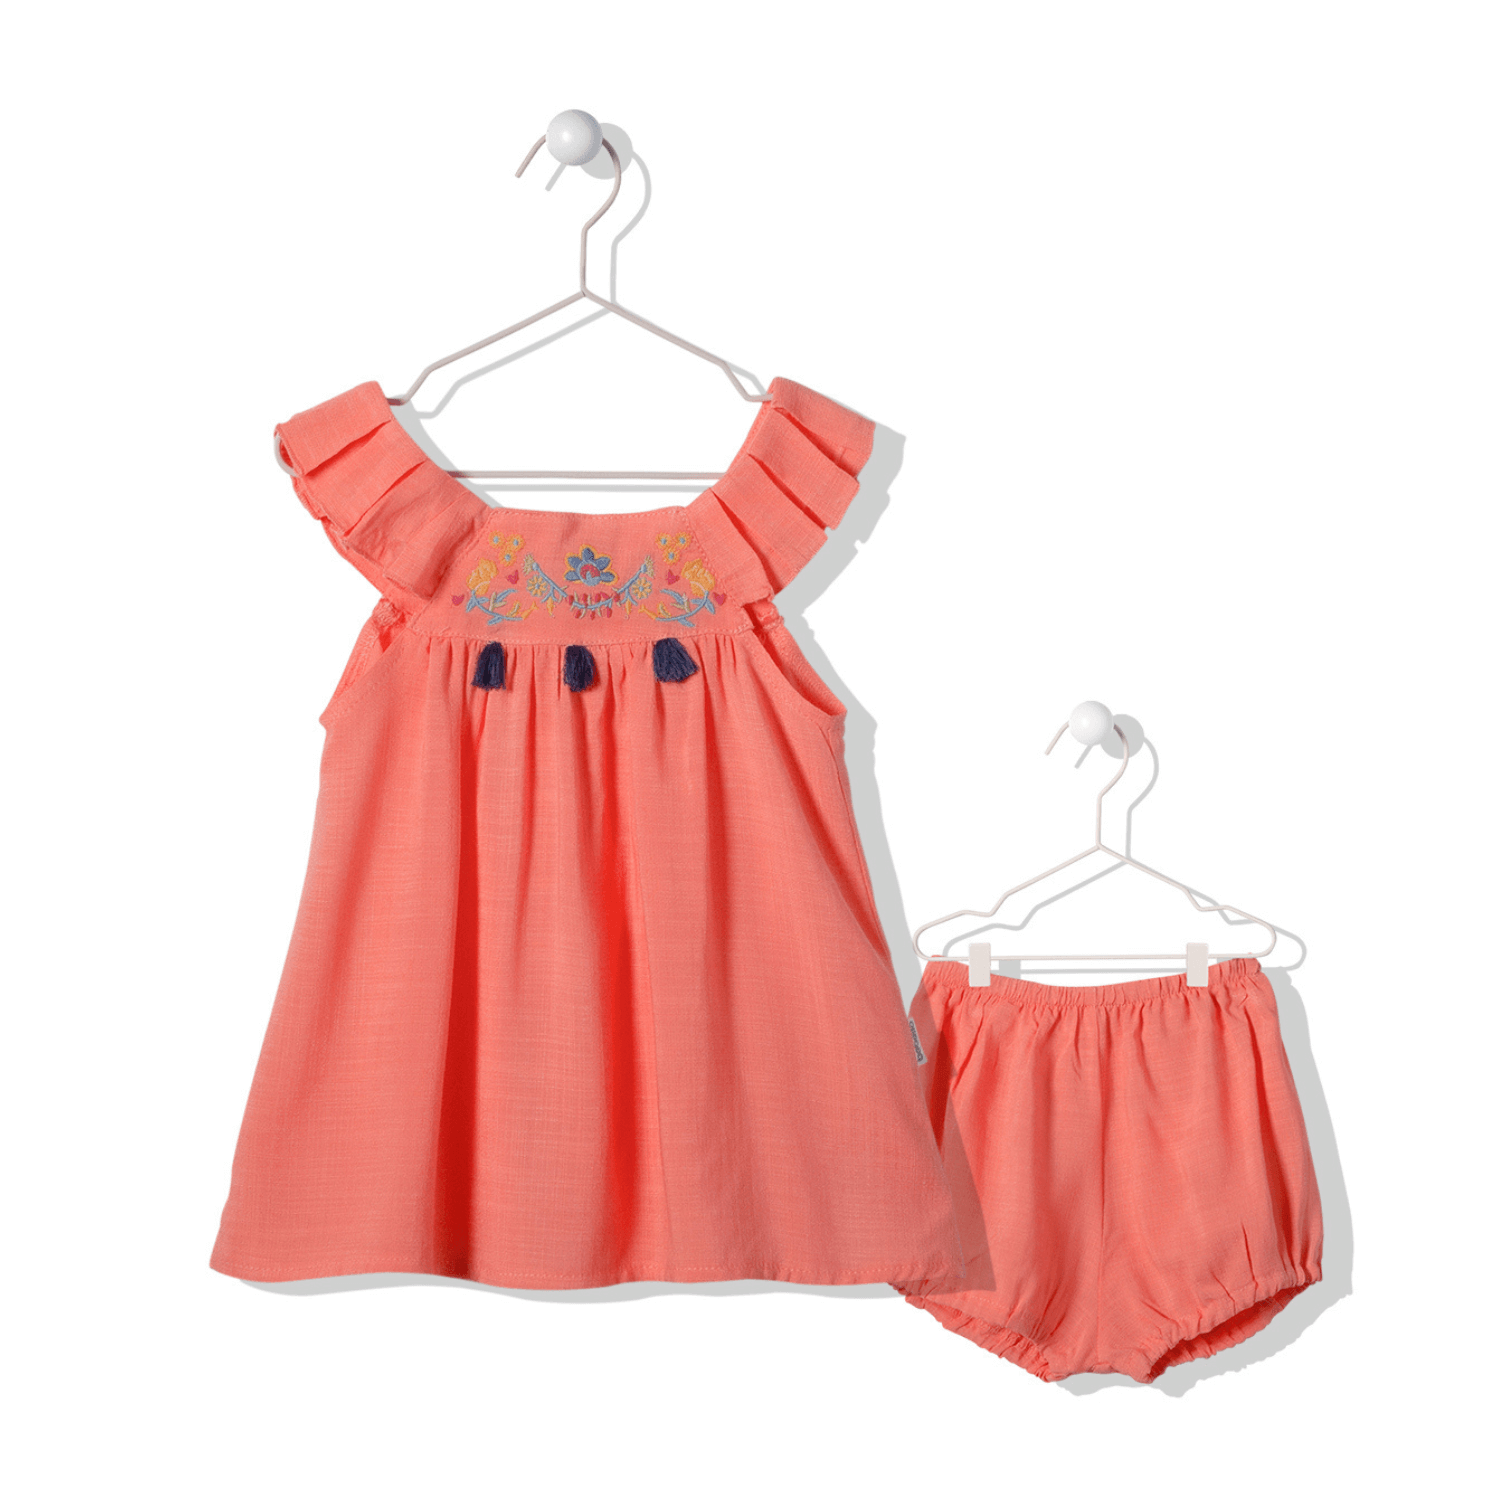 🌷FLORENCE EISEMAN BABY GIRL DRESS SIZE 9 MONTHS | Baby girl dress, Girls  dresses, Clothes design